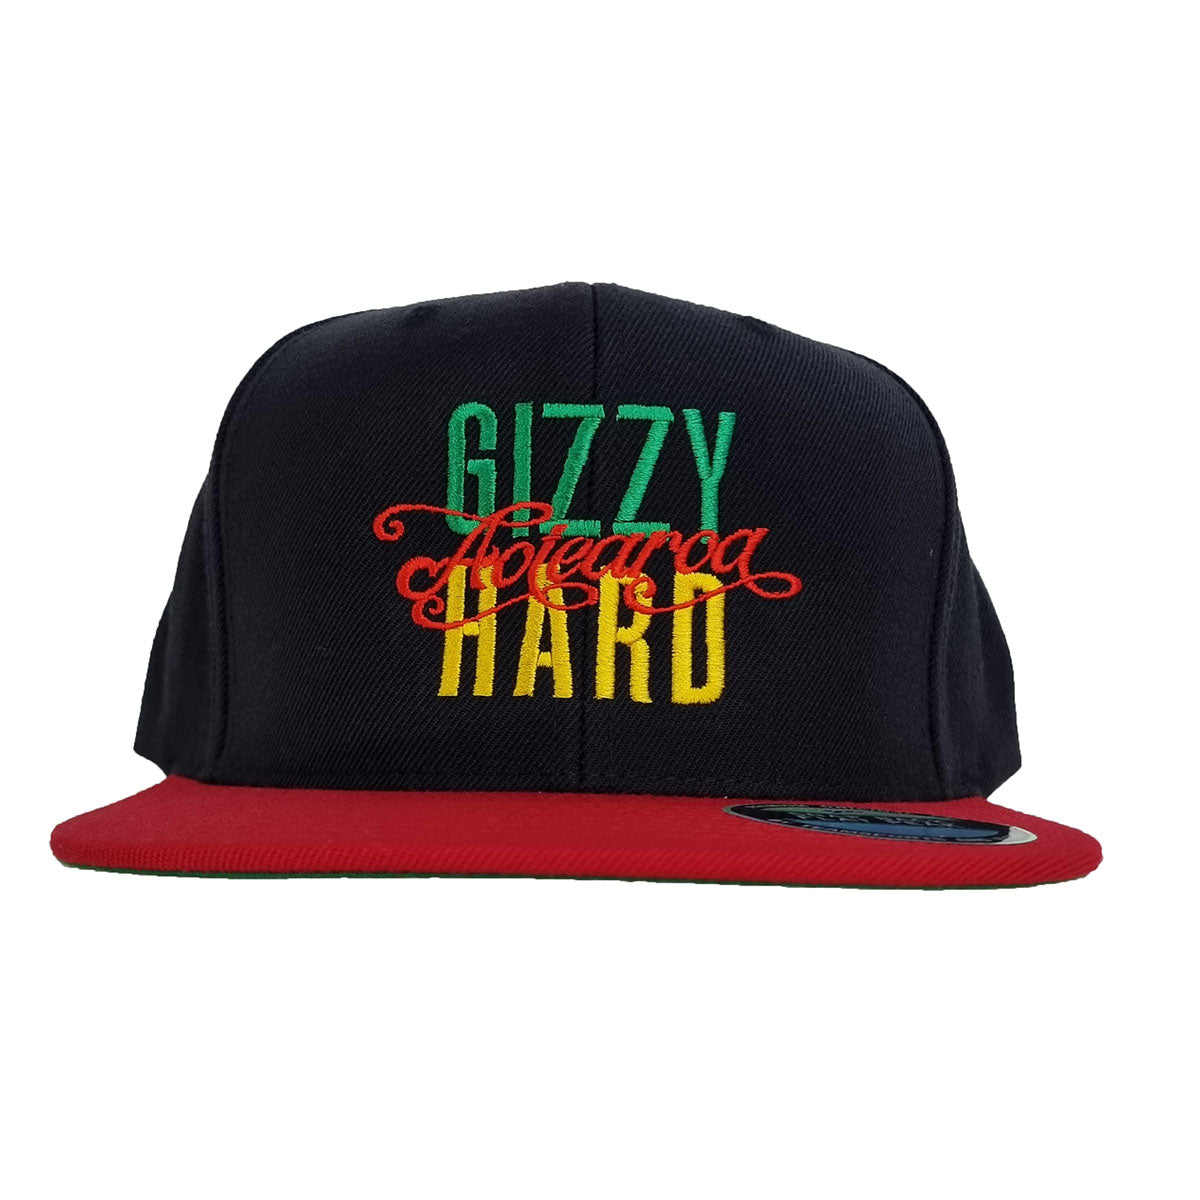 Gizzy Hard Aotearoa Flexfit Flat Peak SB Cap black with red peak and rasta logo